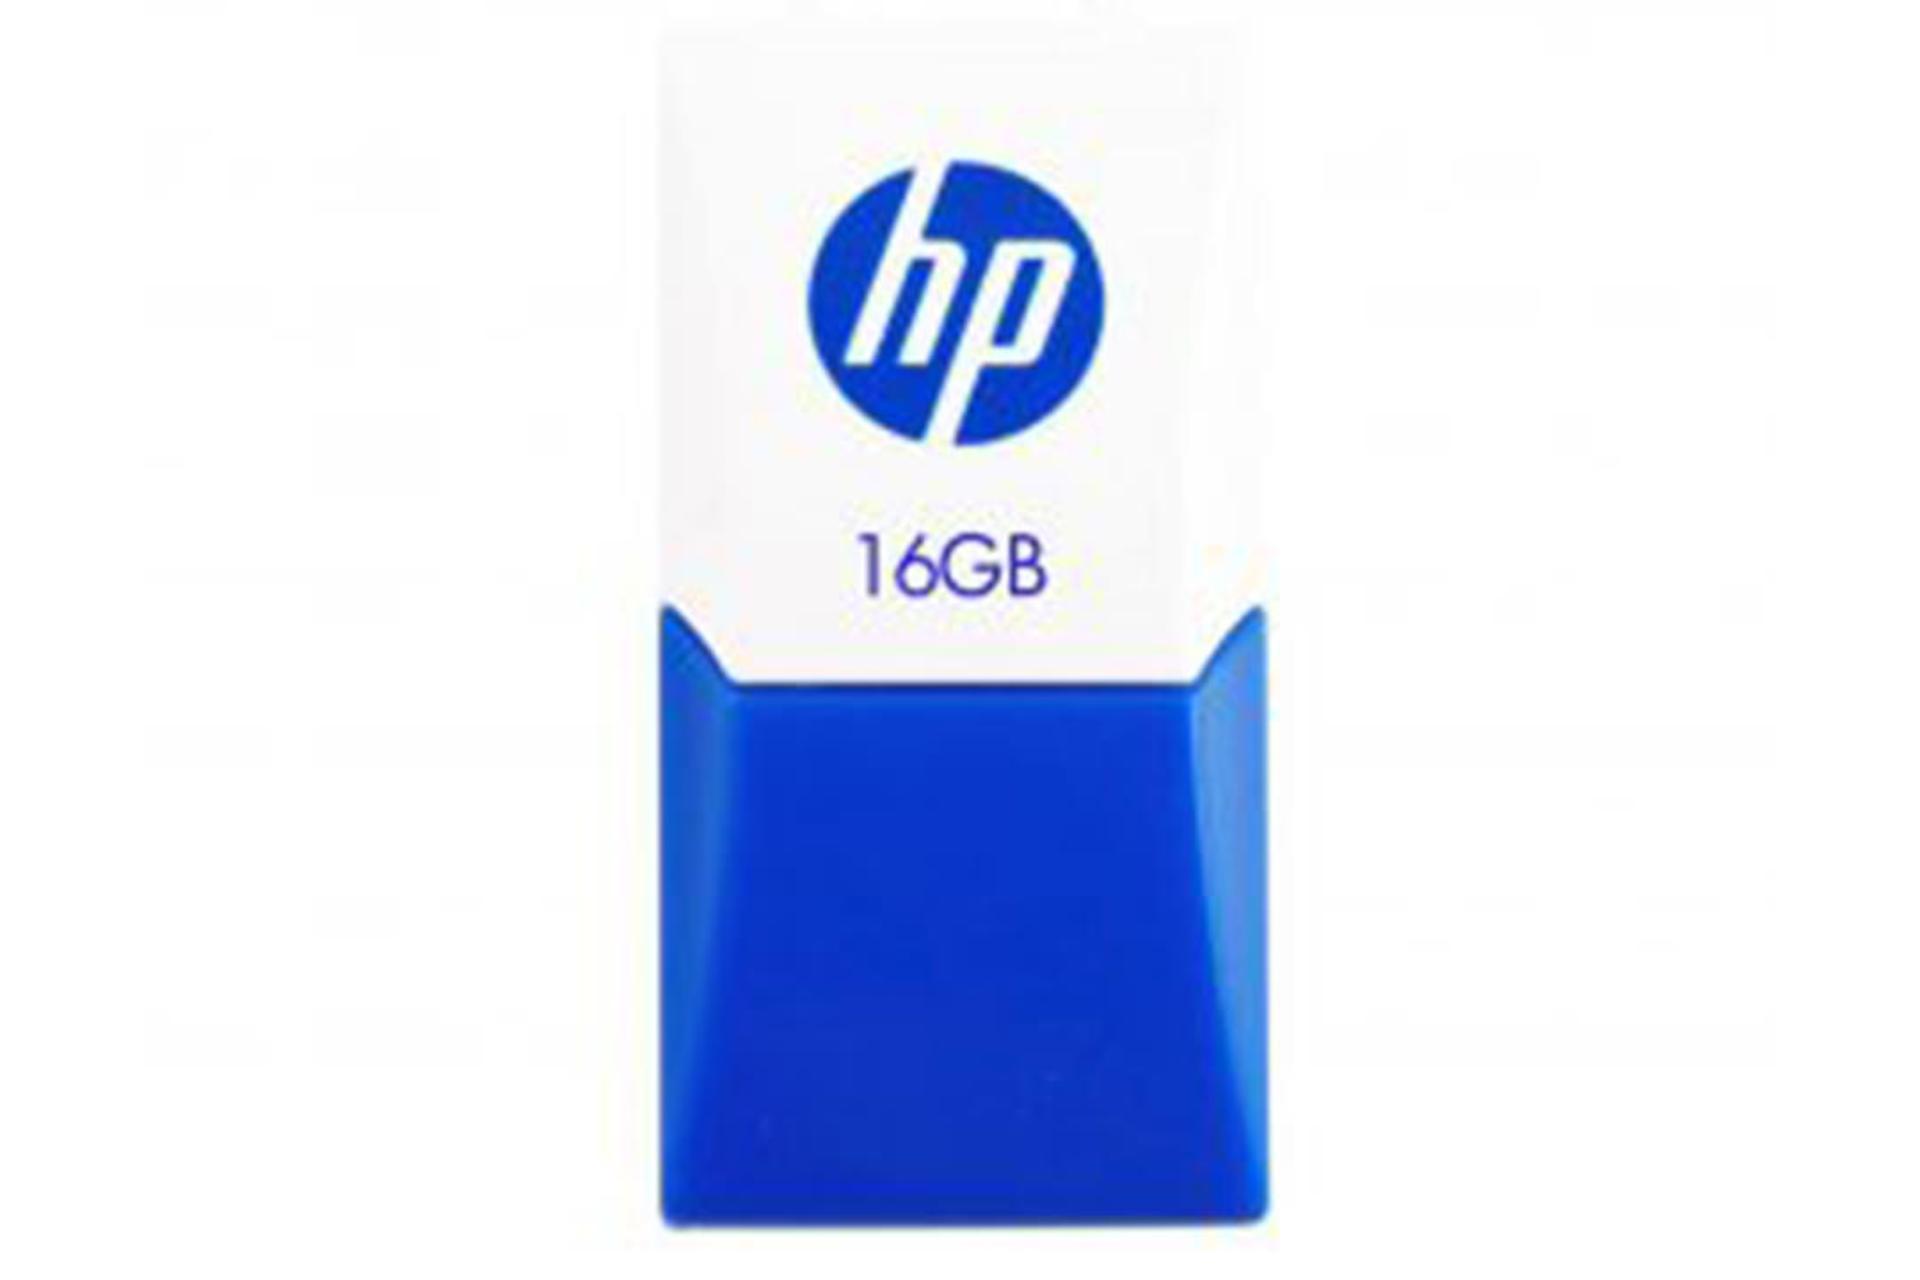 HP v160 16GB